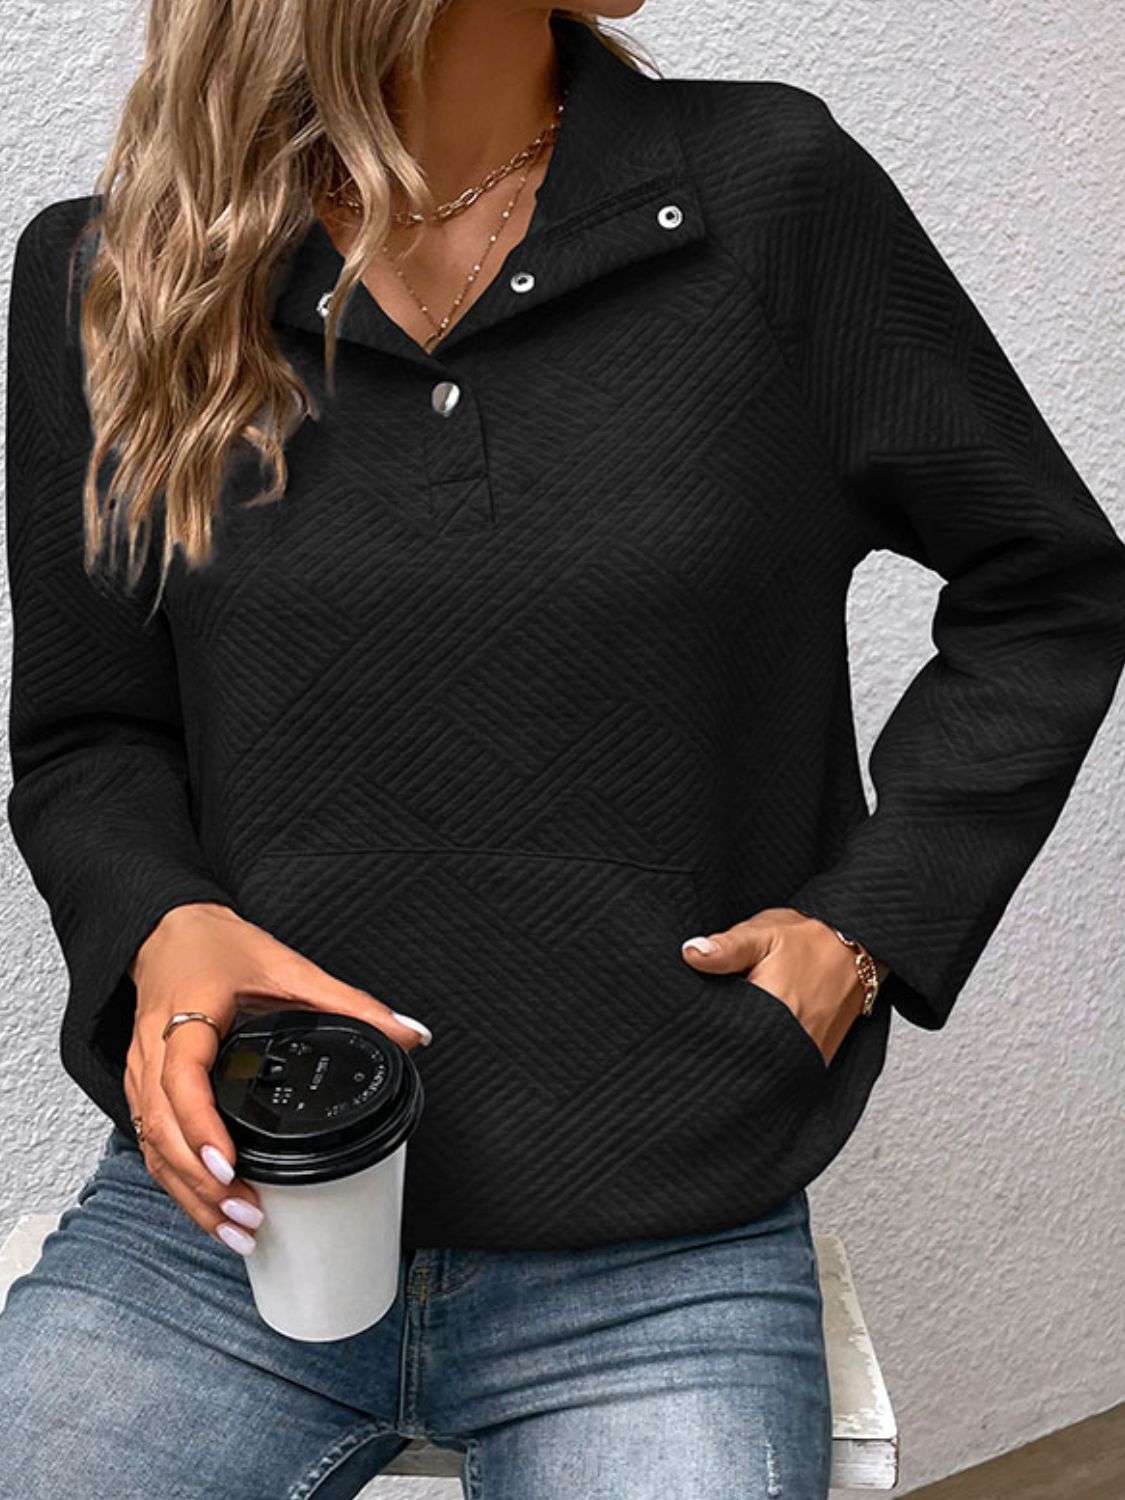 Raglan Sleeve Collared Neck Sweatshirt with Pocket Print on any thing USA/STOD clothes